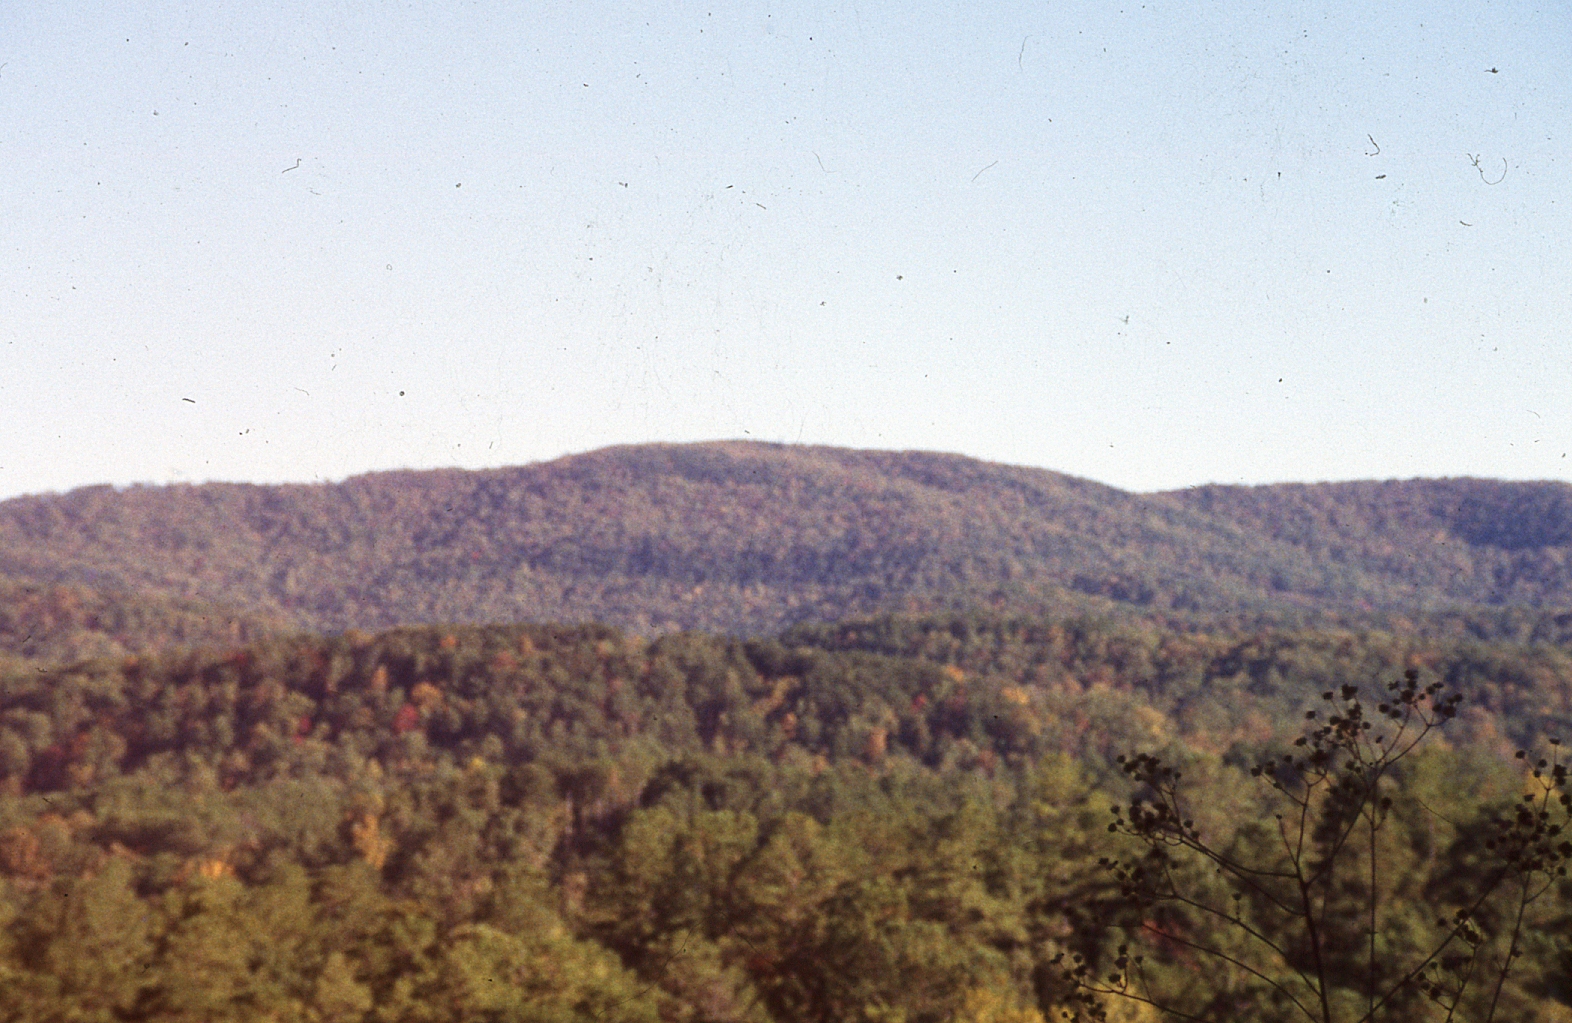 Dugger Mountain Wilderness Area in northeastern Alabama